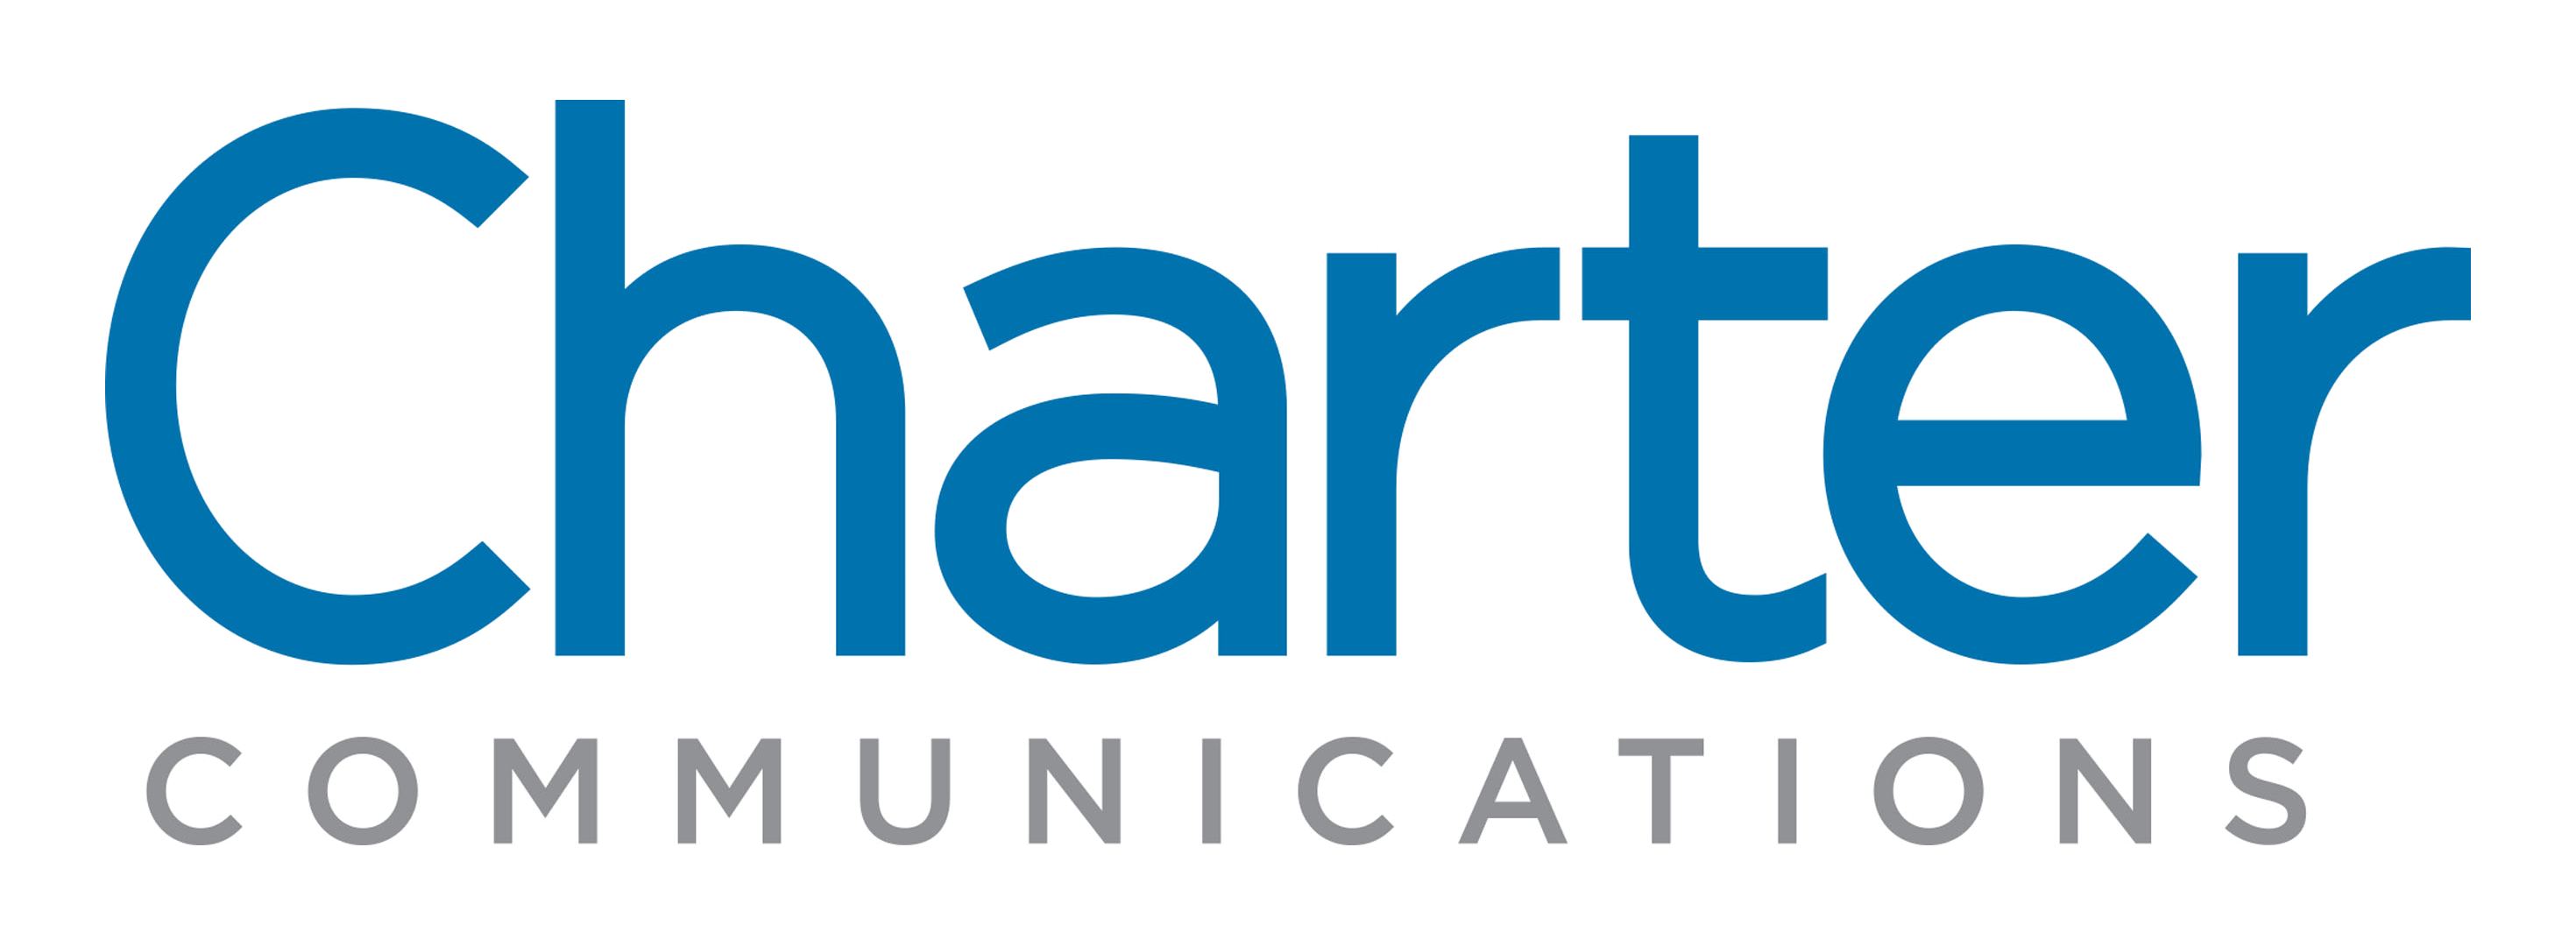 Charter Communications Logo PNG Image